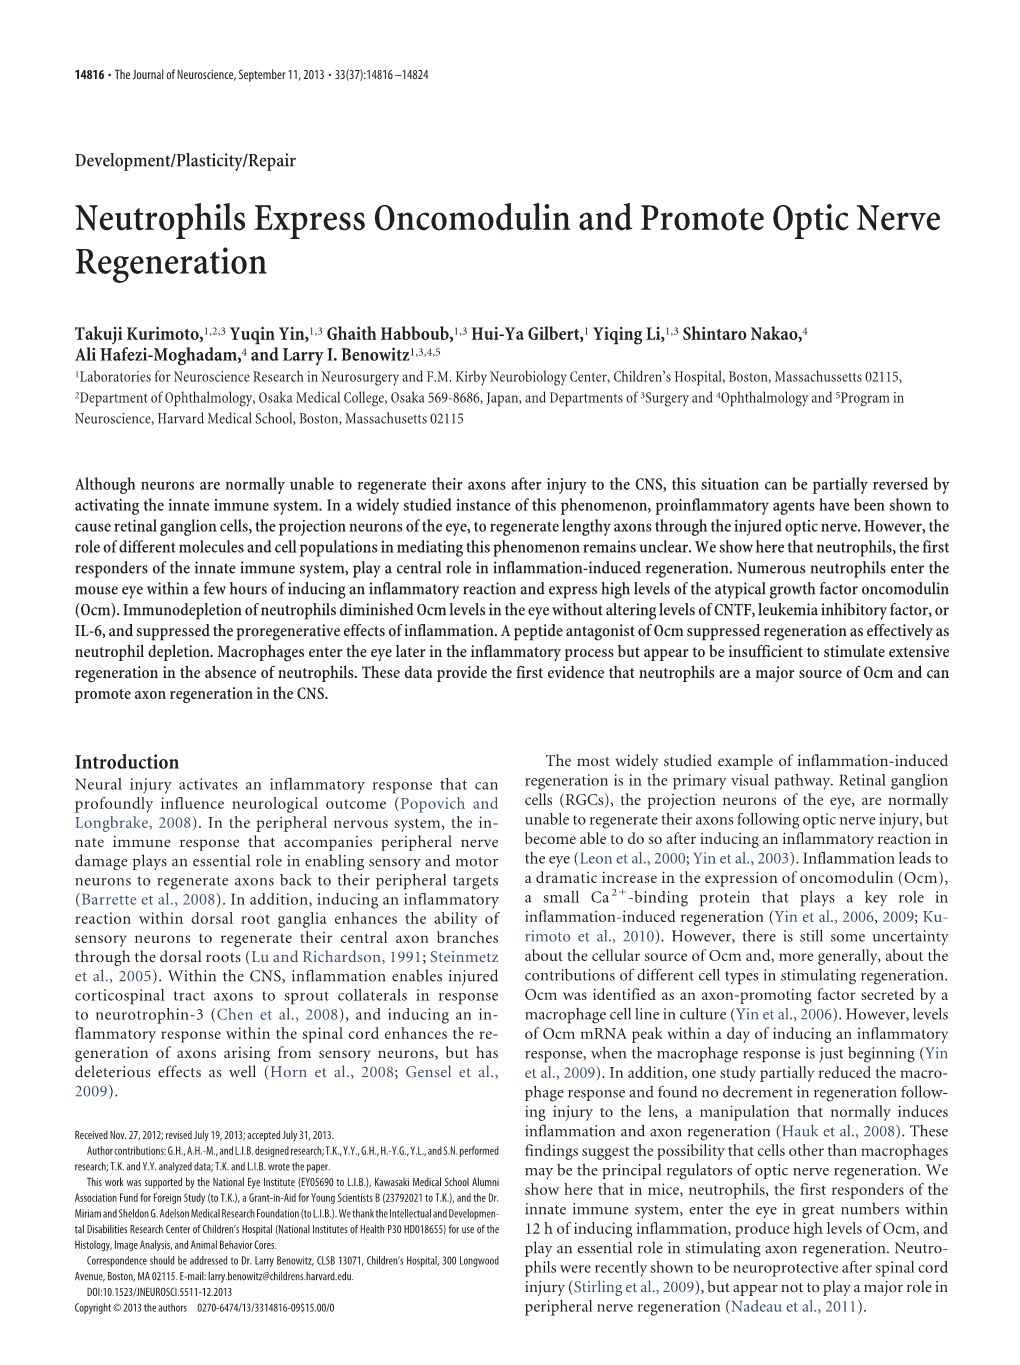 Neutrophils Express Oncomodulin and Promote Optic Nerve Regeneration